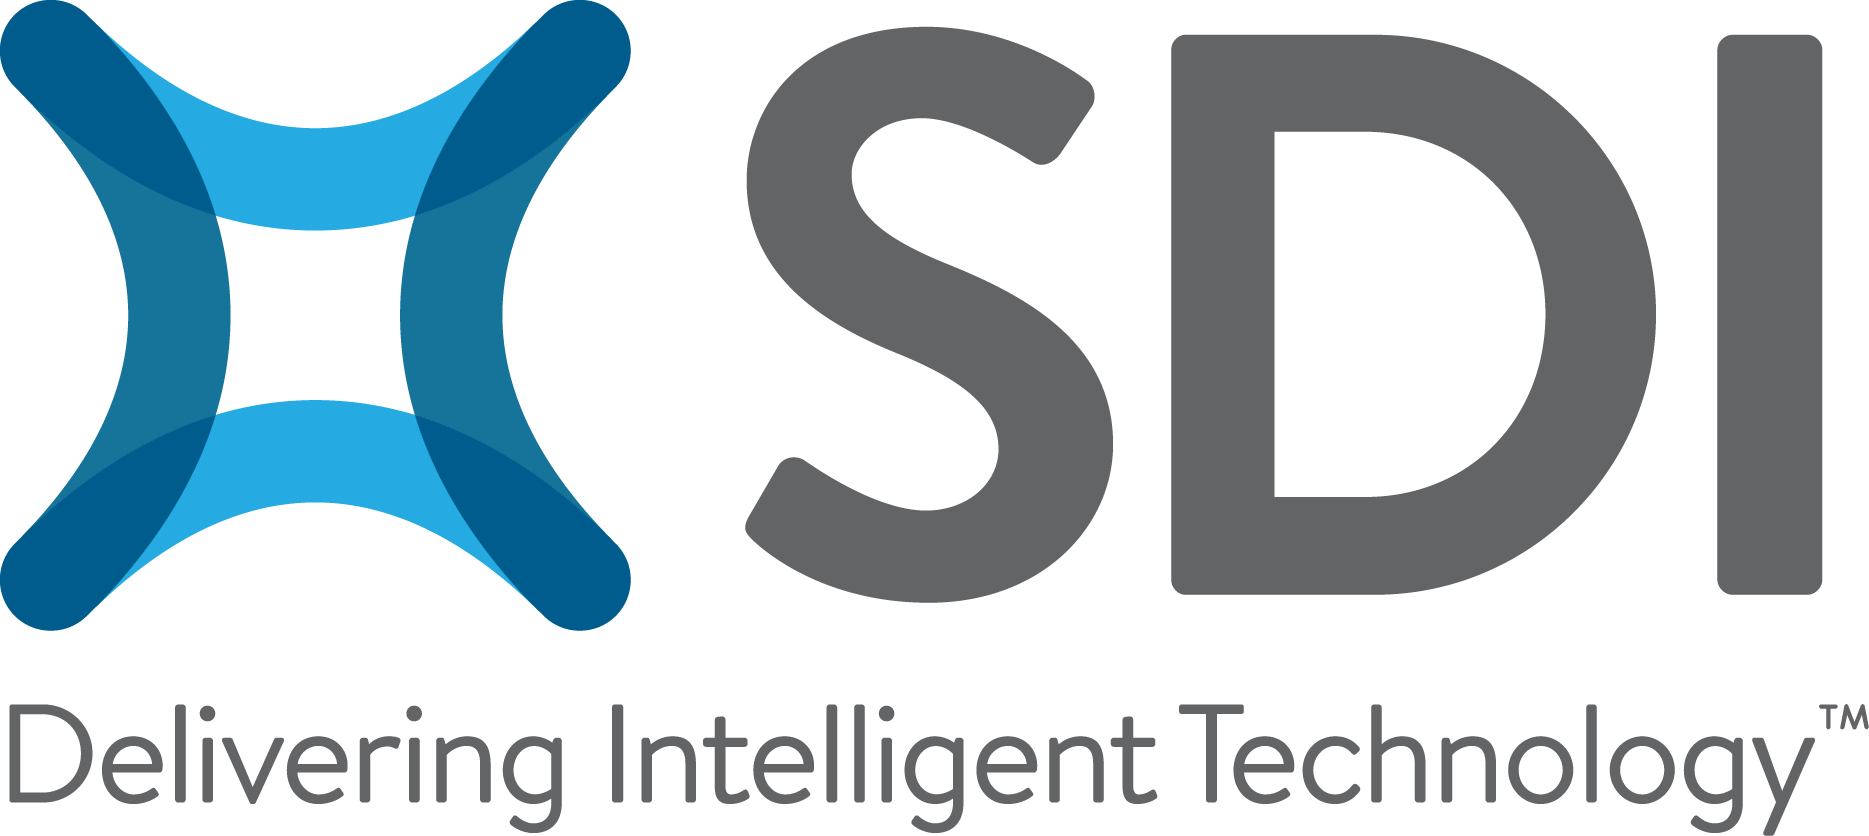 SDI Presence LLC